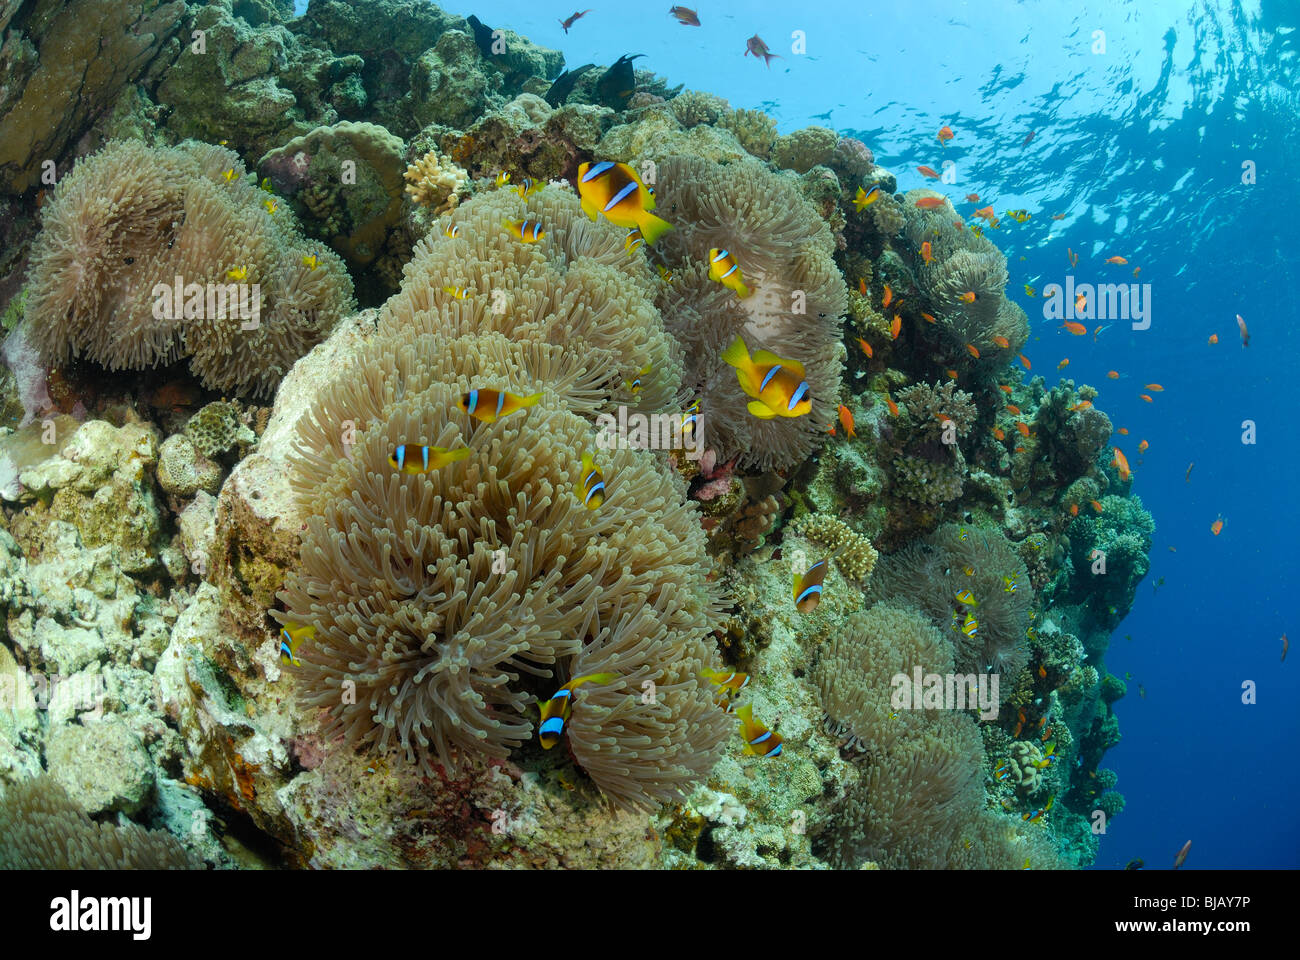 Anemoni con twobands anemonefishes off Safaga, Egitto, Mar Rosso. Foto Stock